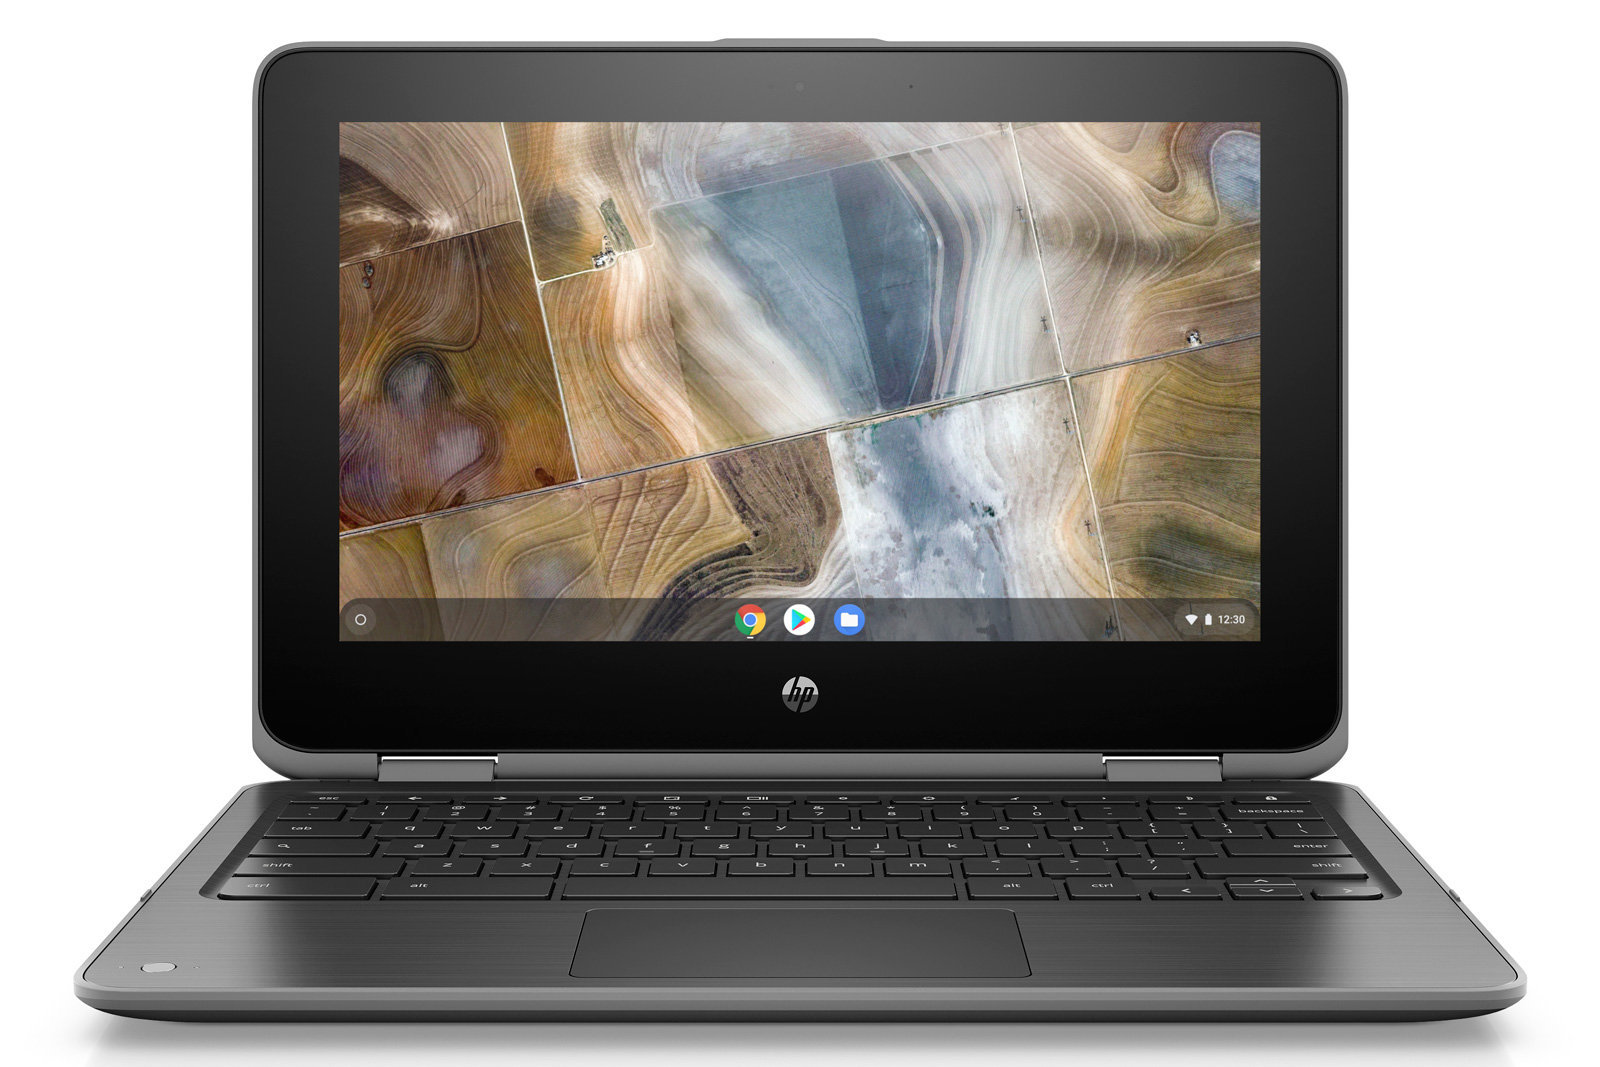 HP’s latest school Chromebooks are built for exploring